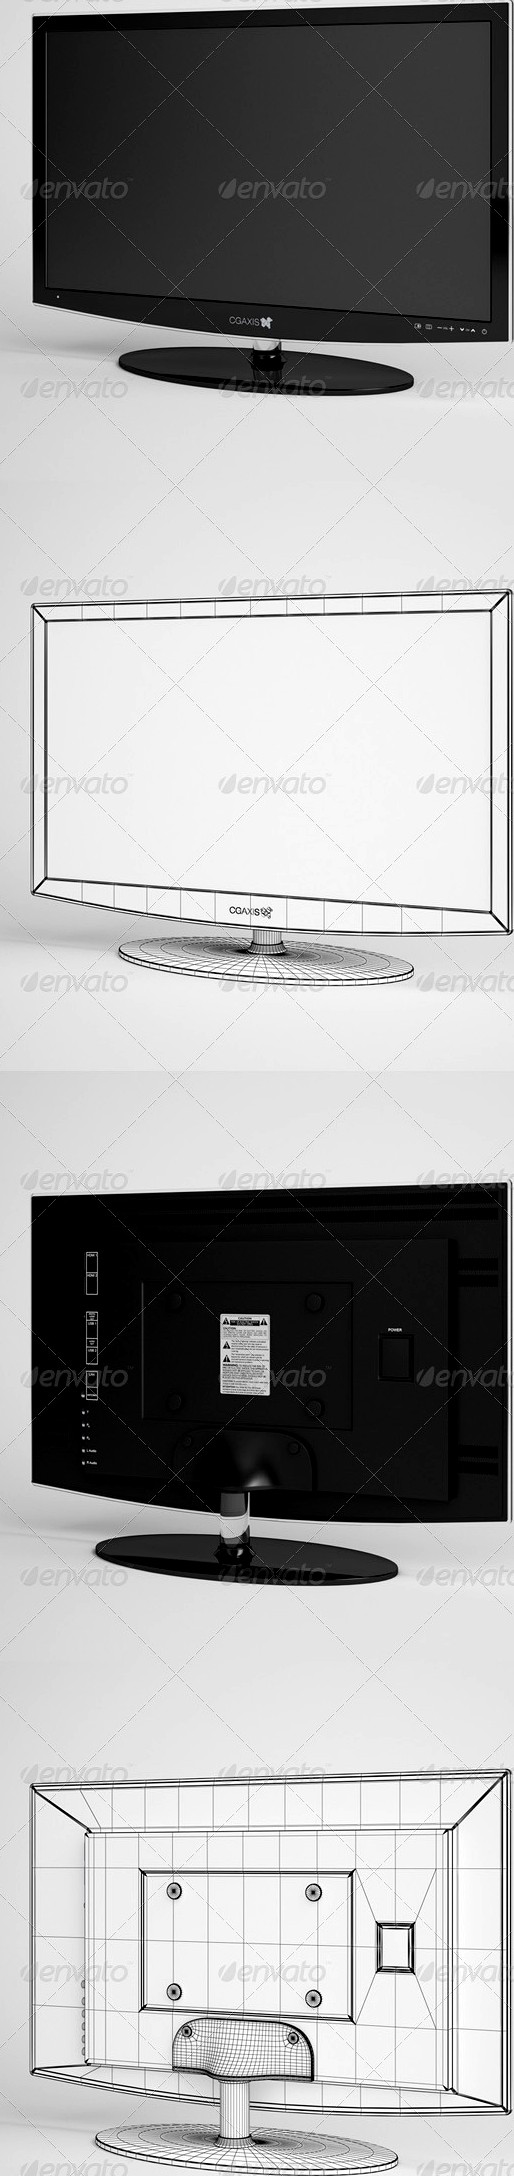 CGAxis TV Flatscreen Electronics 04